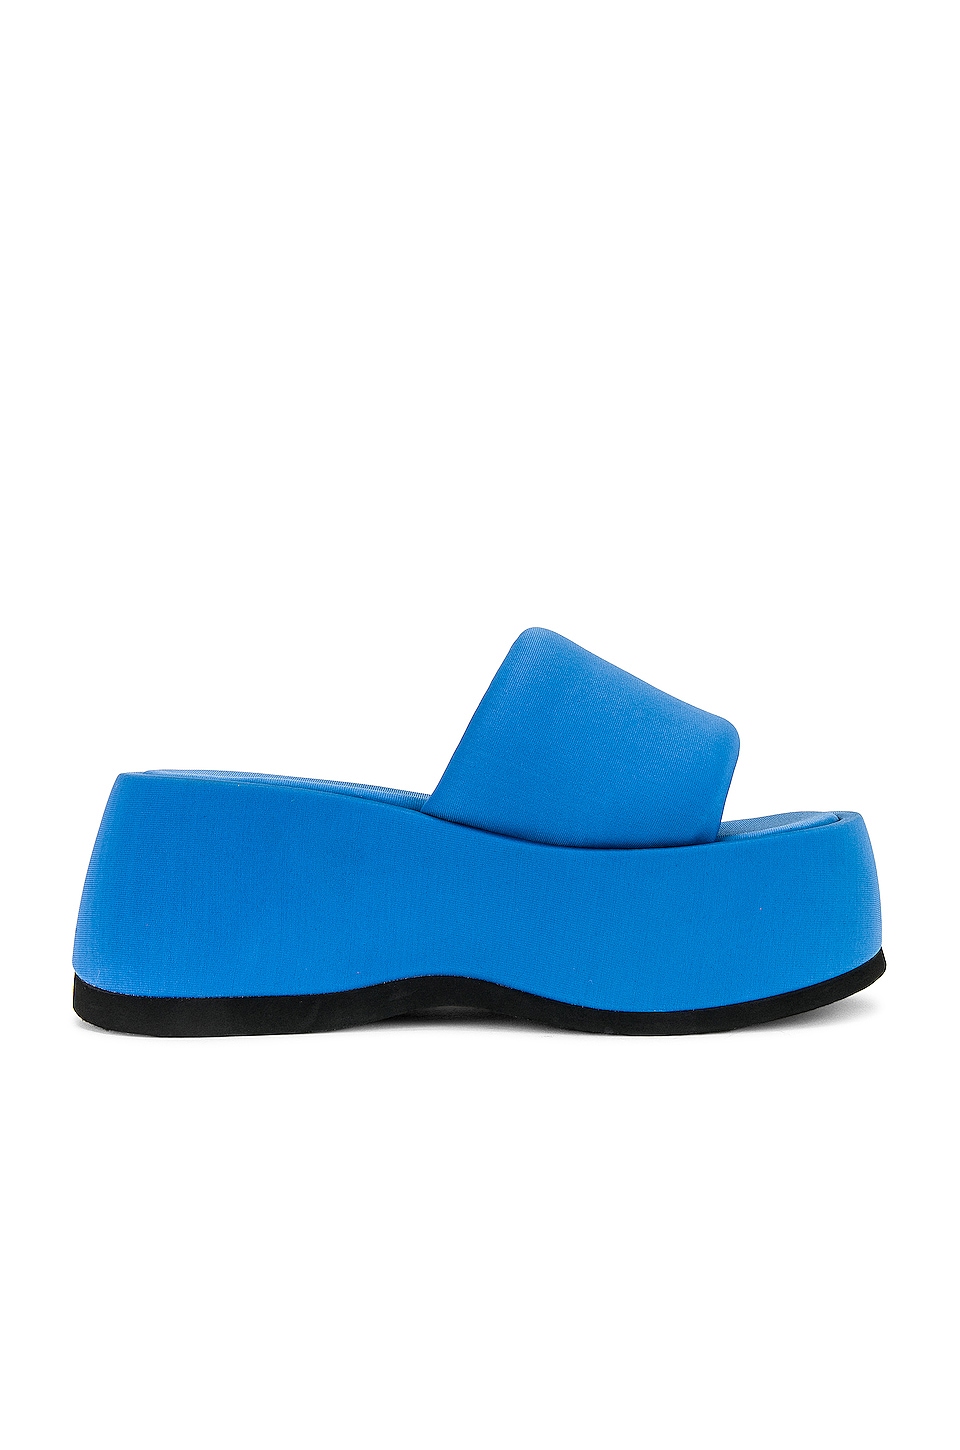 Jeffrey Campbell Txt Me Platform Sandal in Blue Neoprene | REVOLVE